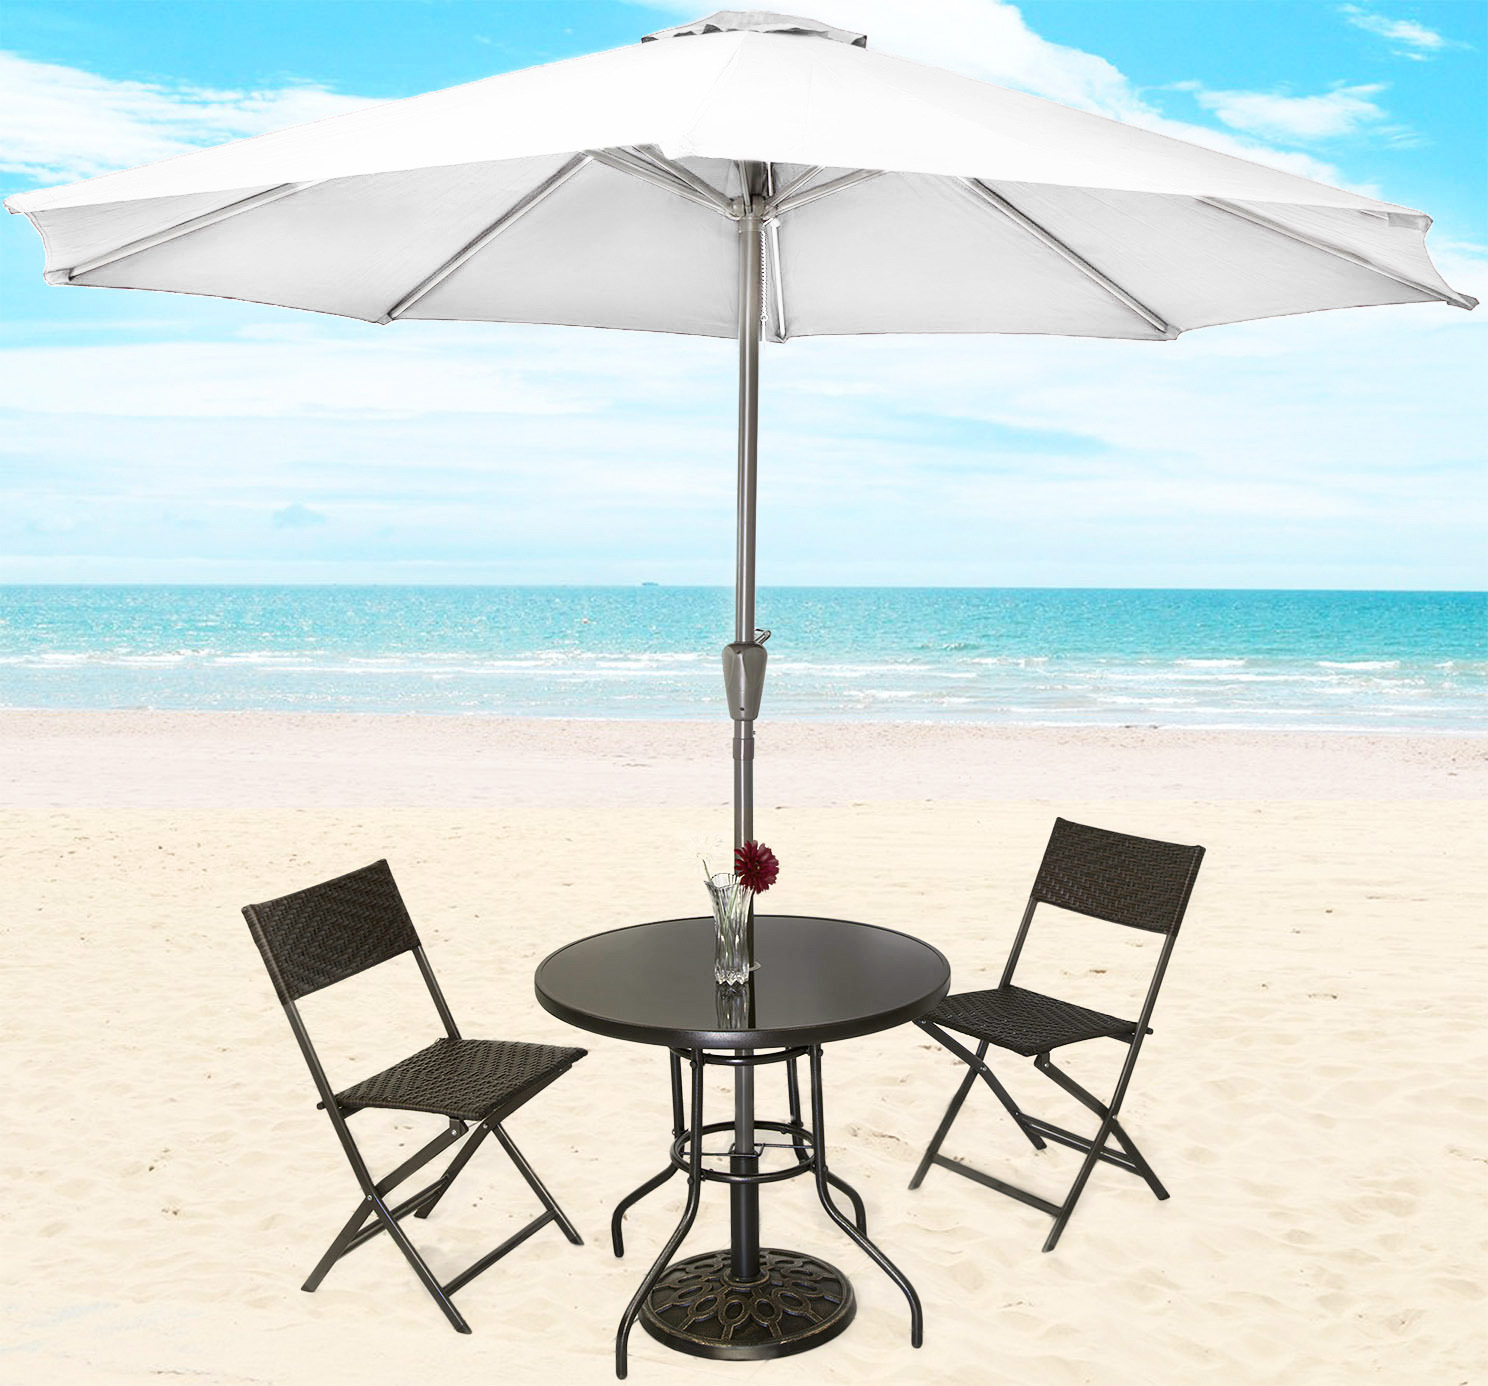 Alfresco 5PC Outdoor Setting (White Umbrella & Stand, 2 Rattan Chairs, Round Table)